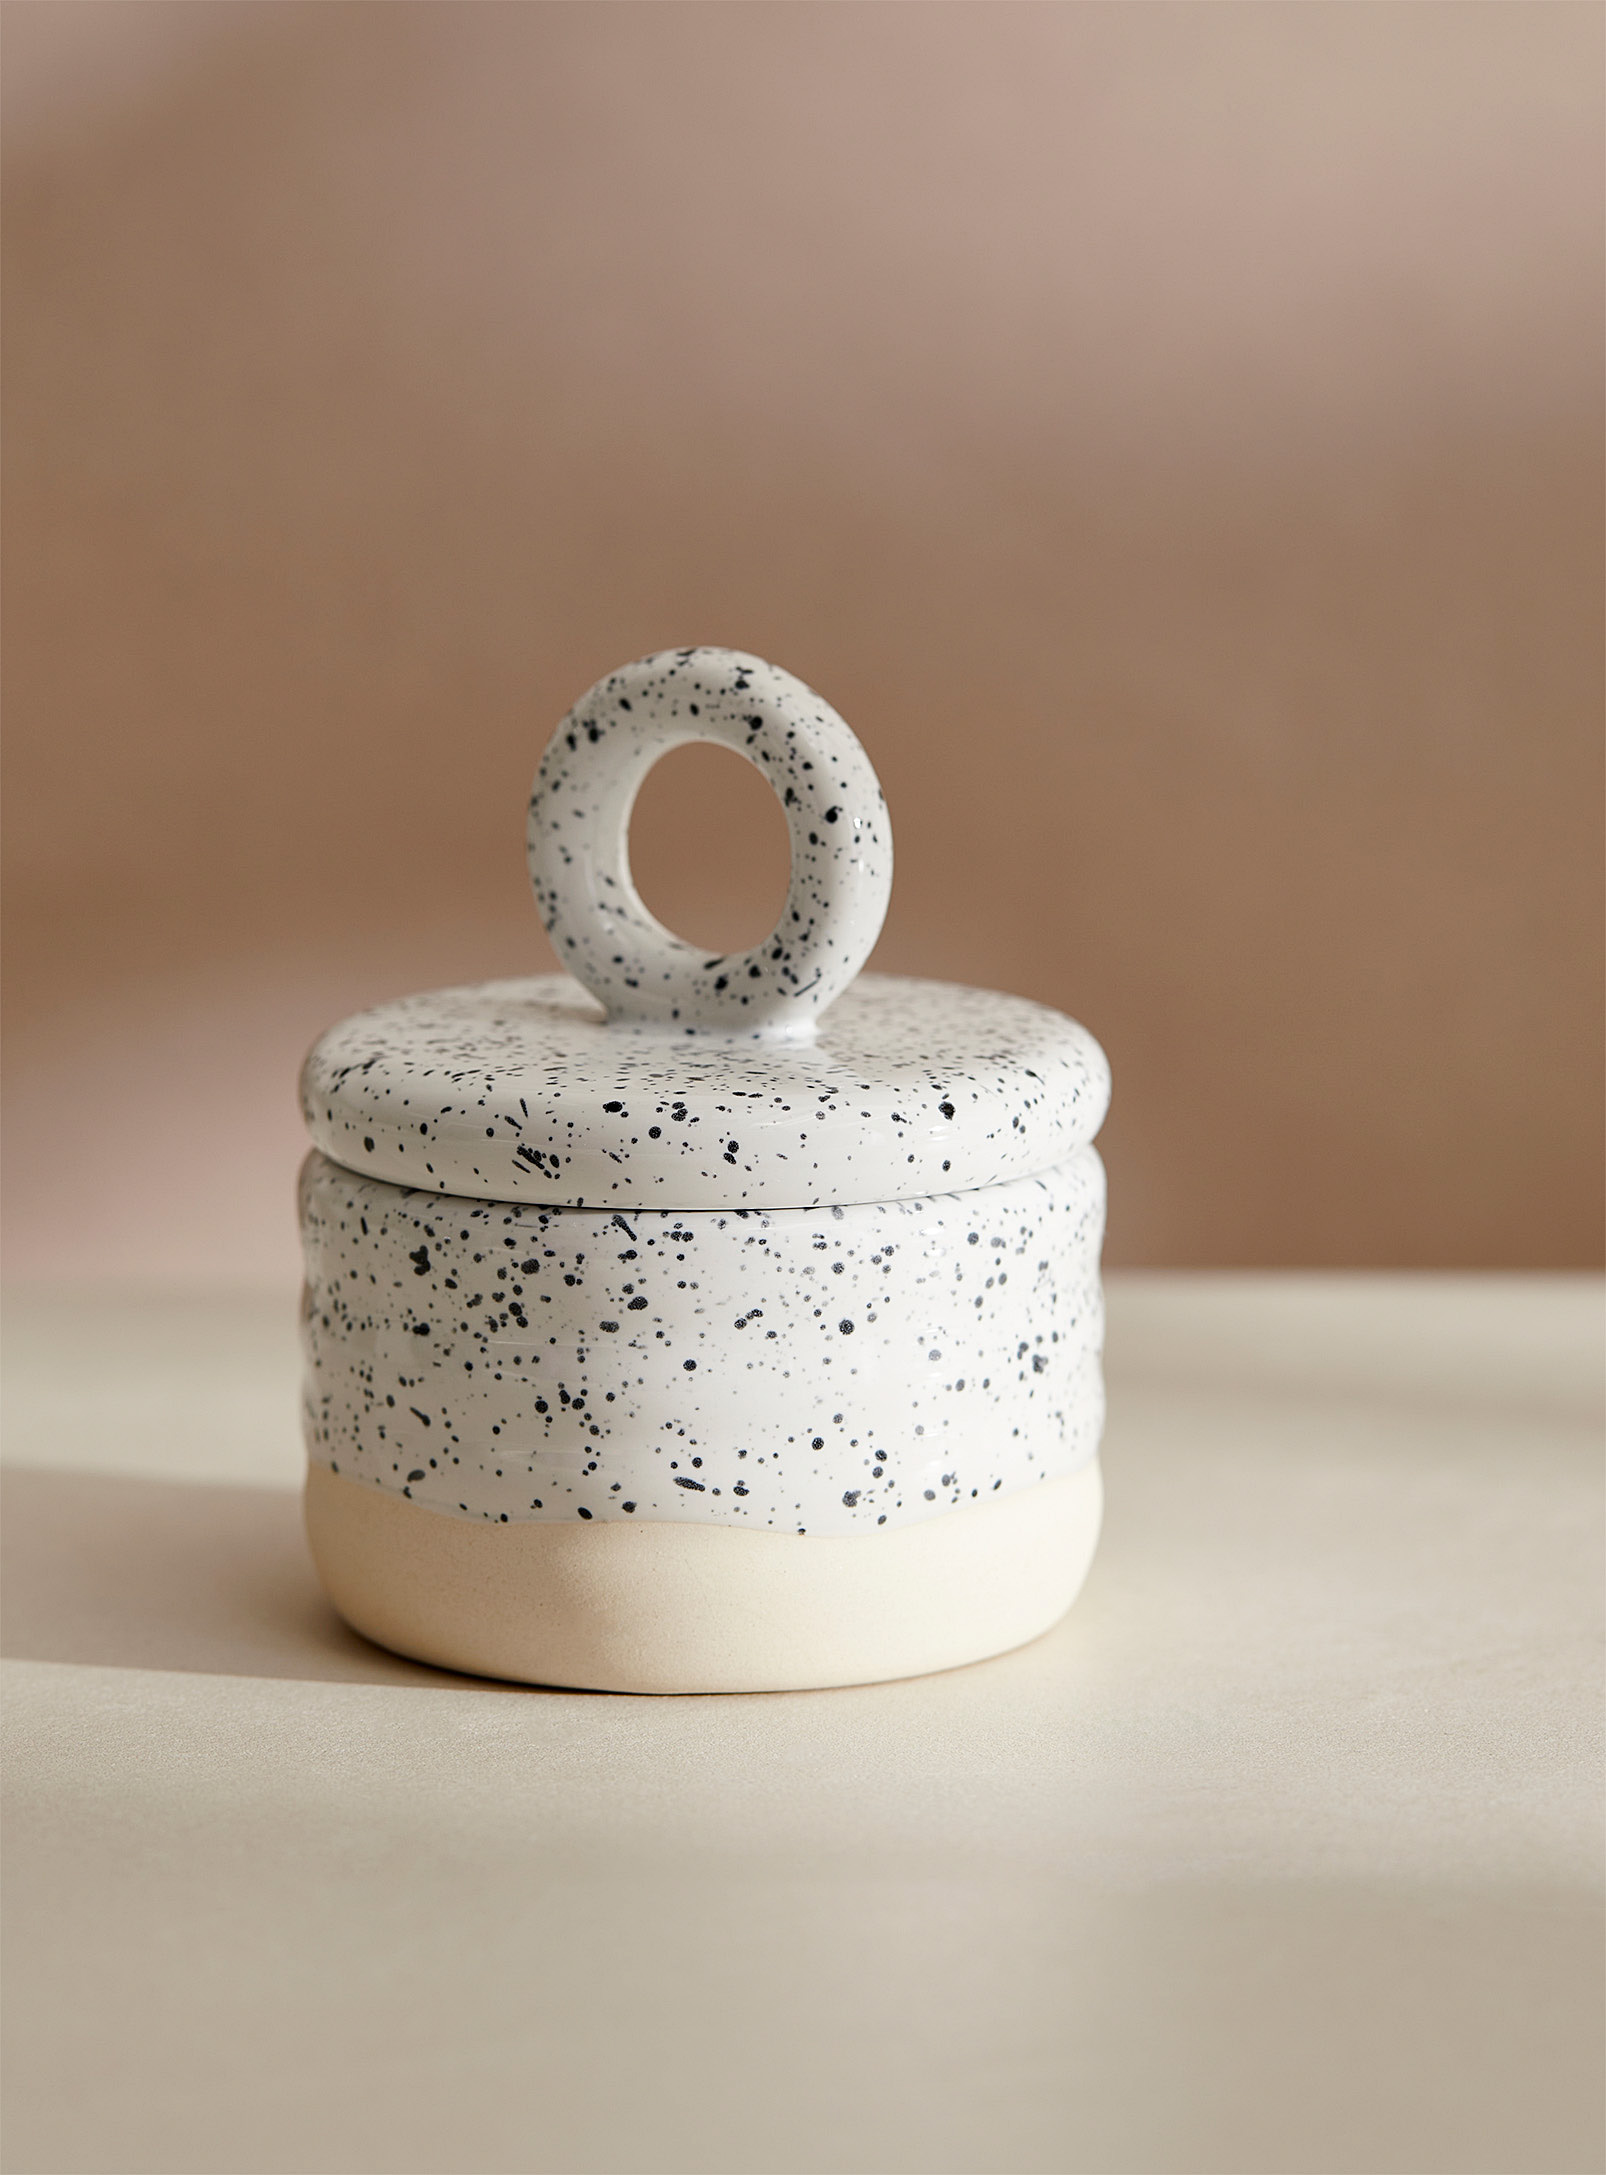 Simons Maison Speckled Ceramic Decorative Jar In Neutral